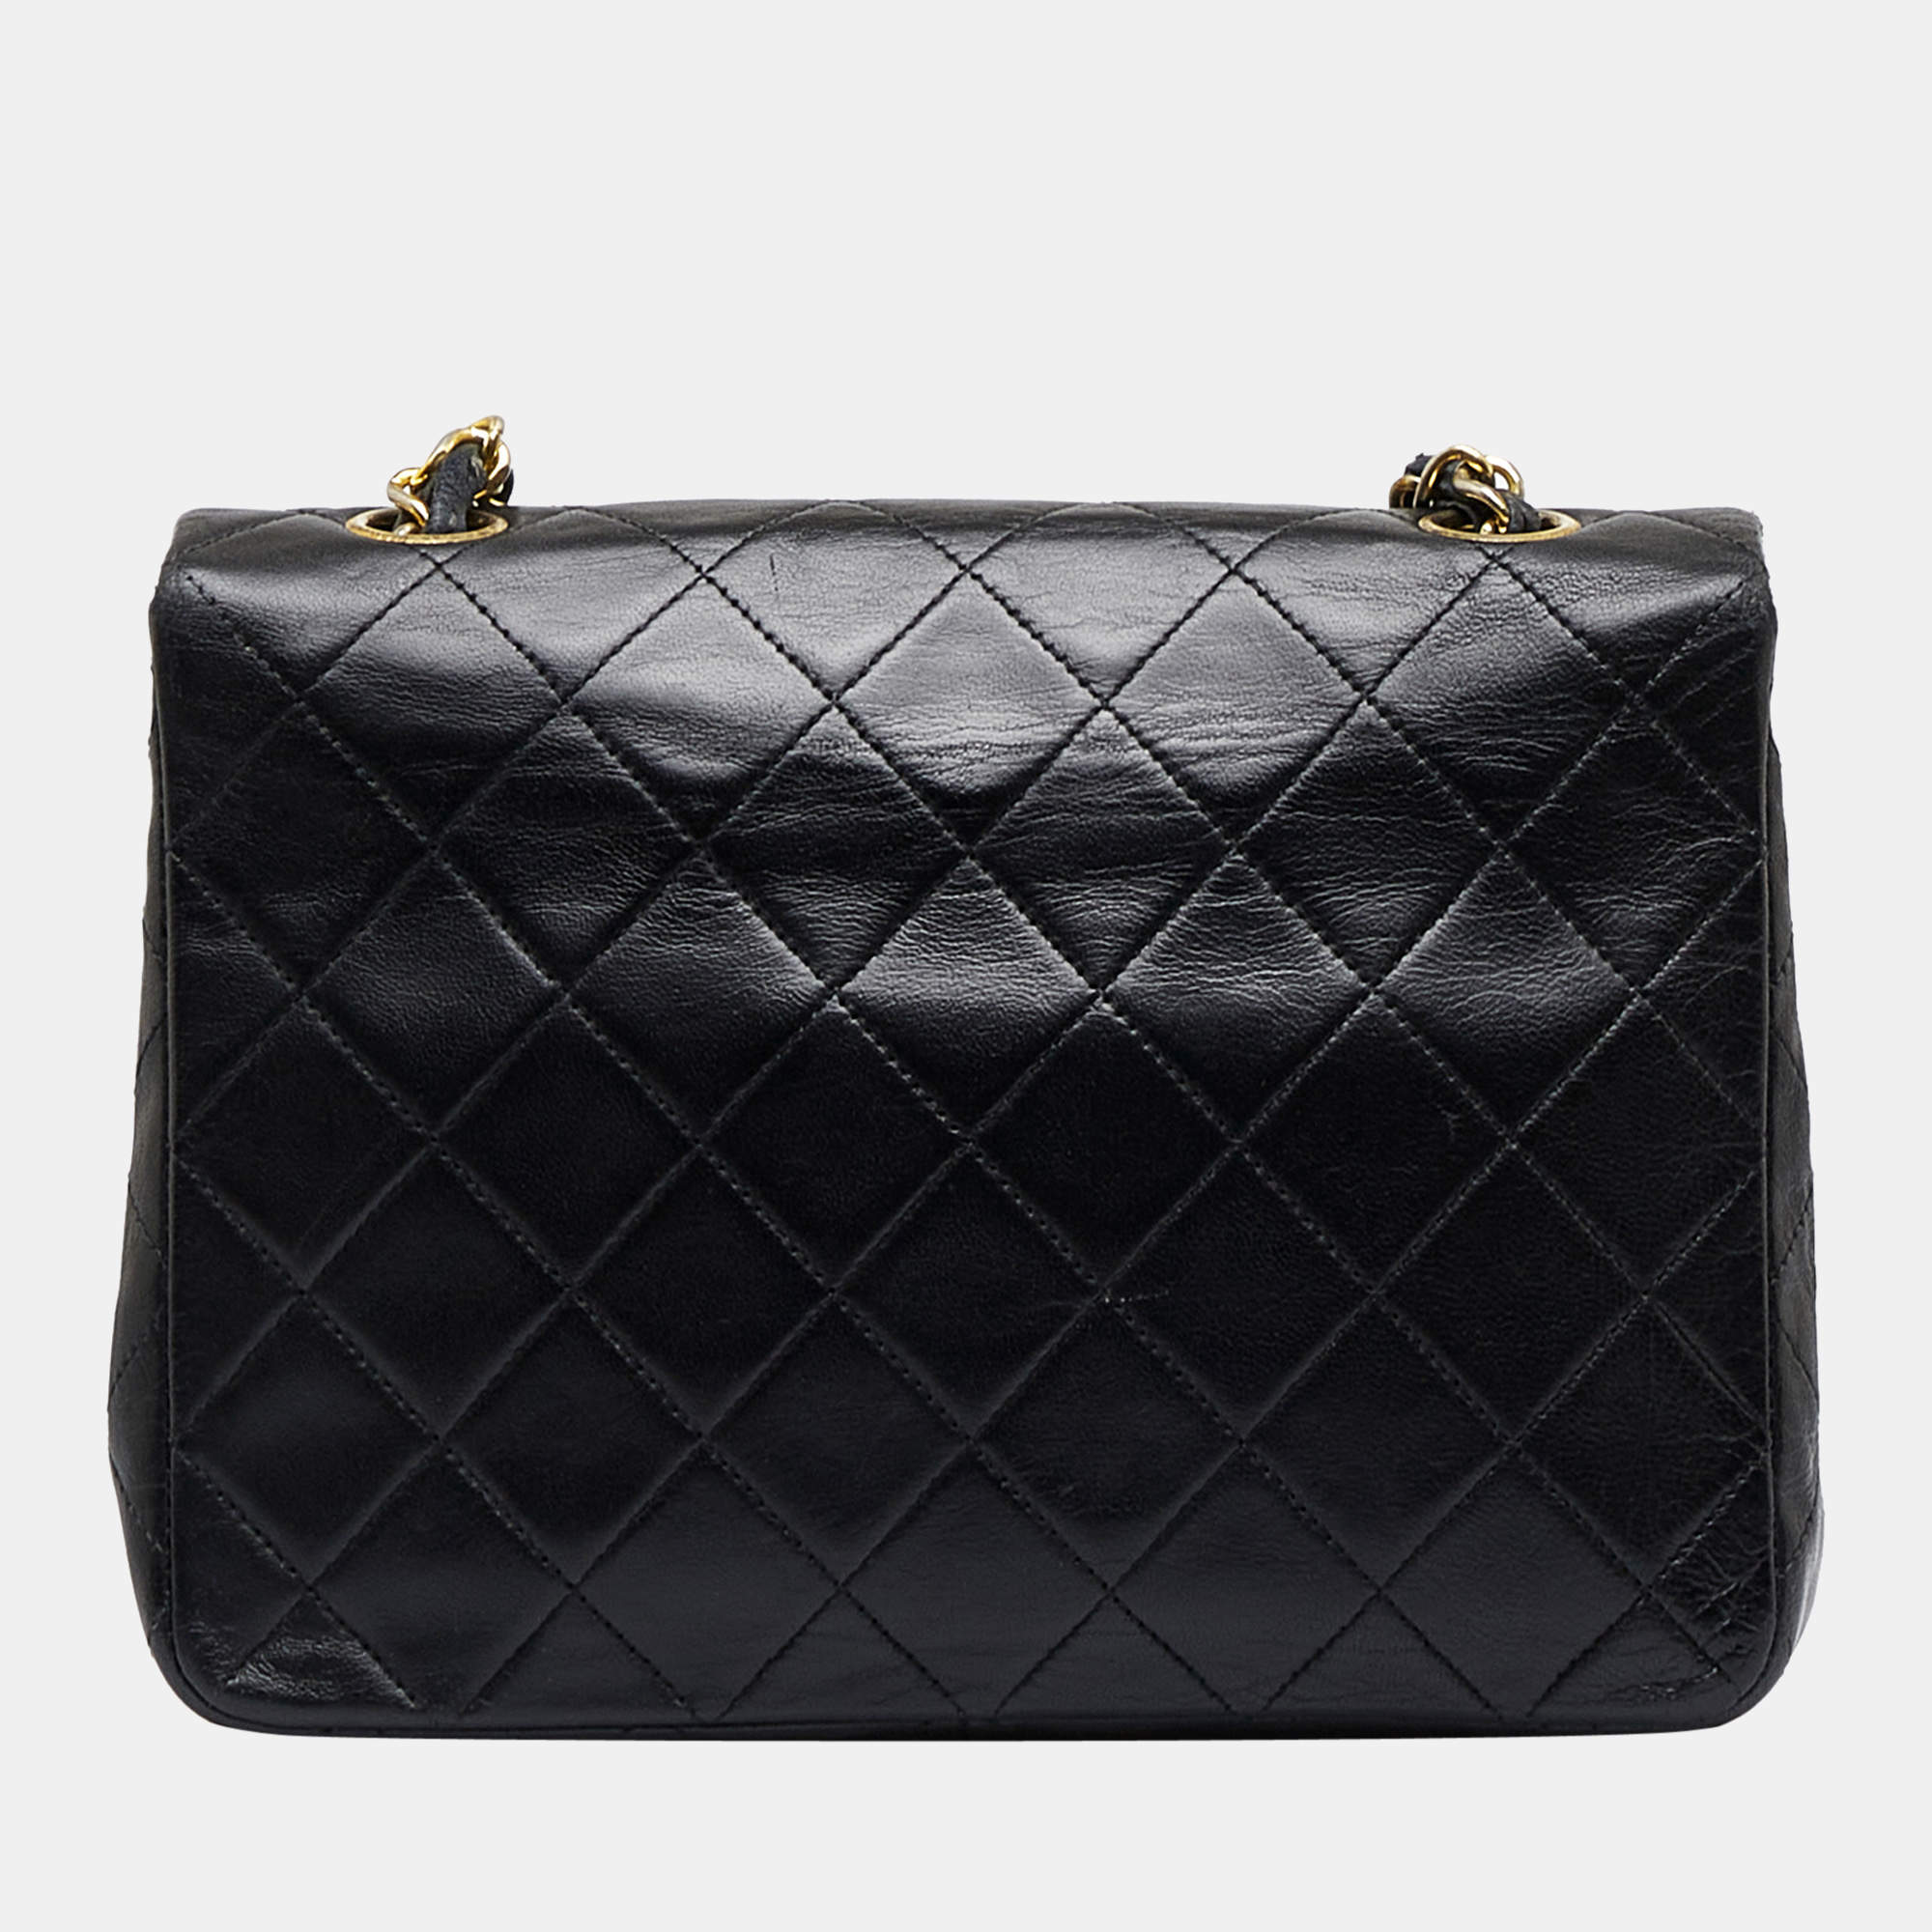 Chanel Black Medium Classic Lambskin Single Flap Bag Chanel